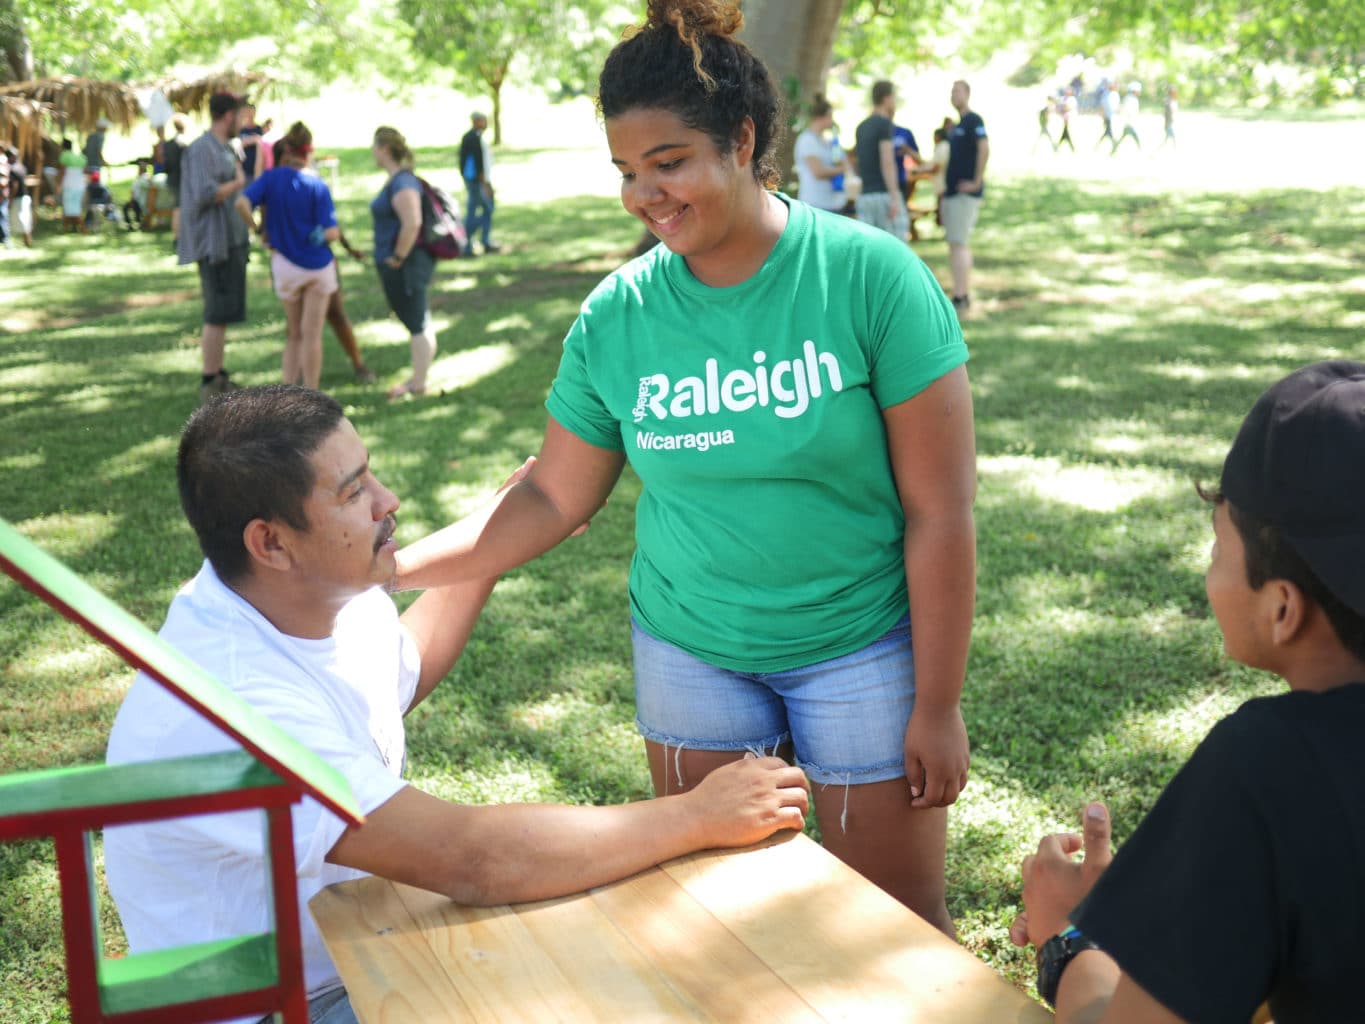 Raleigh Costa Rica celebrates young female entrepreneurs